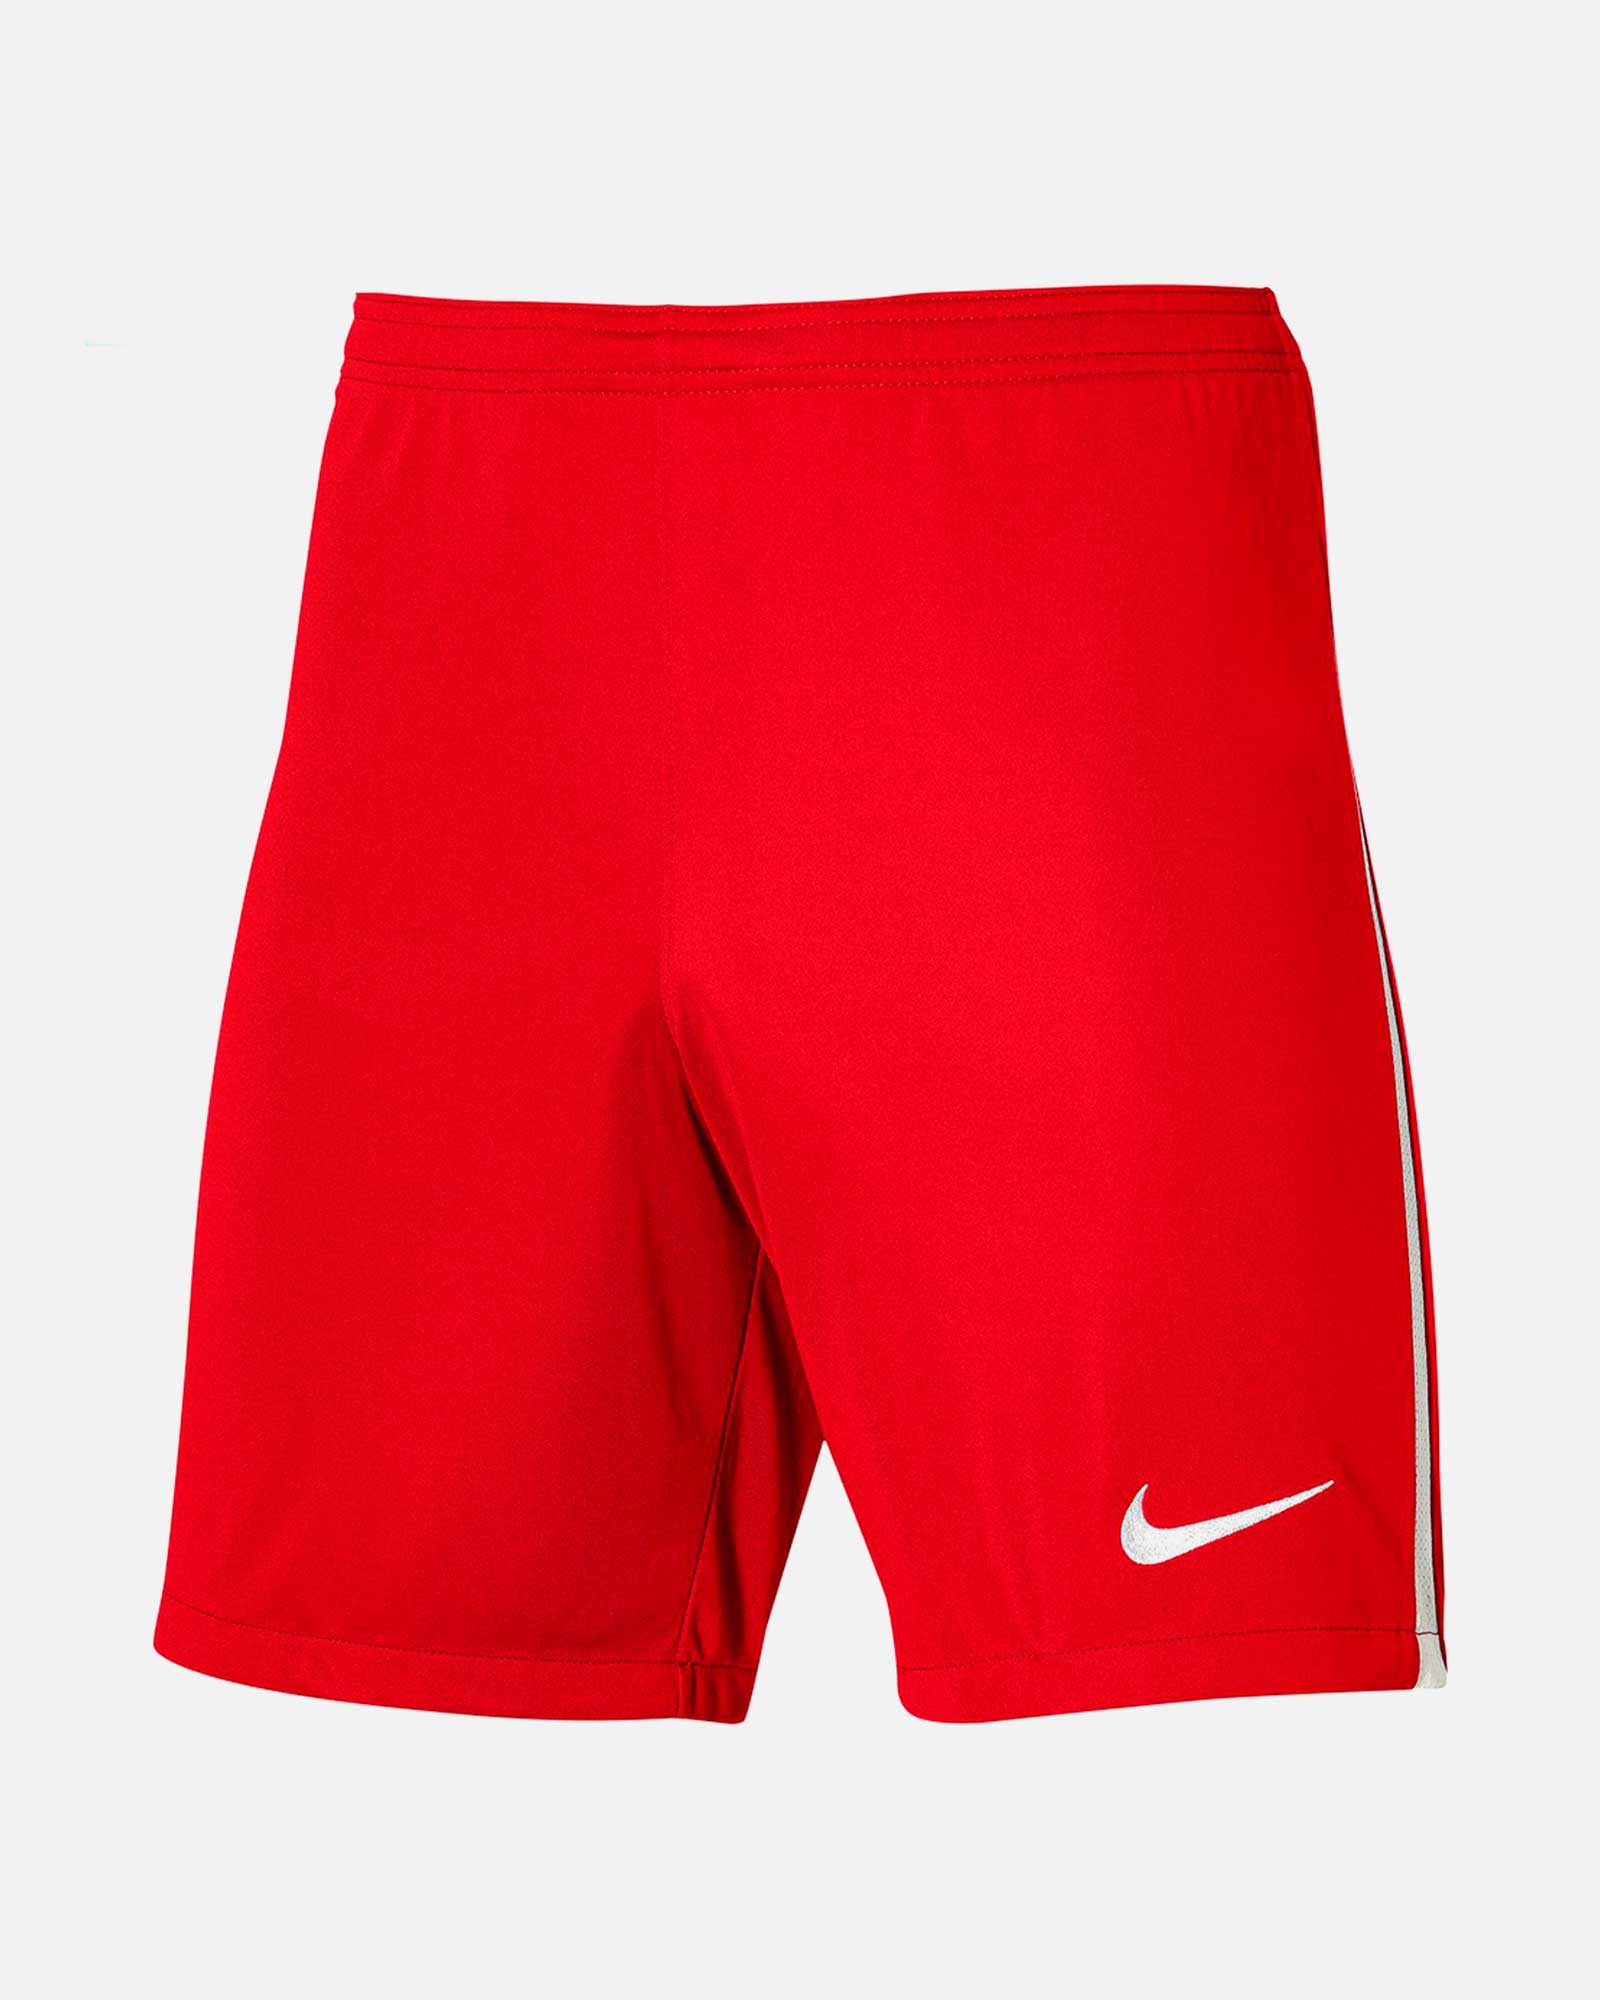 Pantalón Nike Knit League III - Fútbol Factory